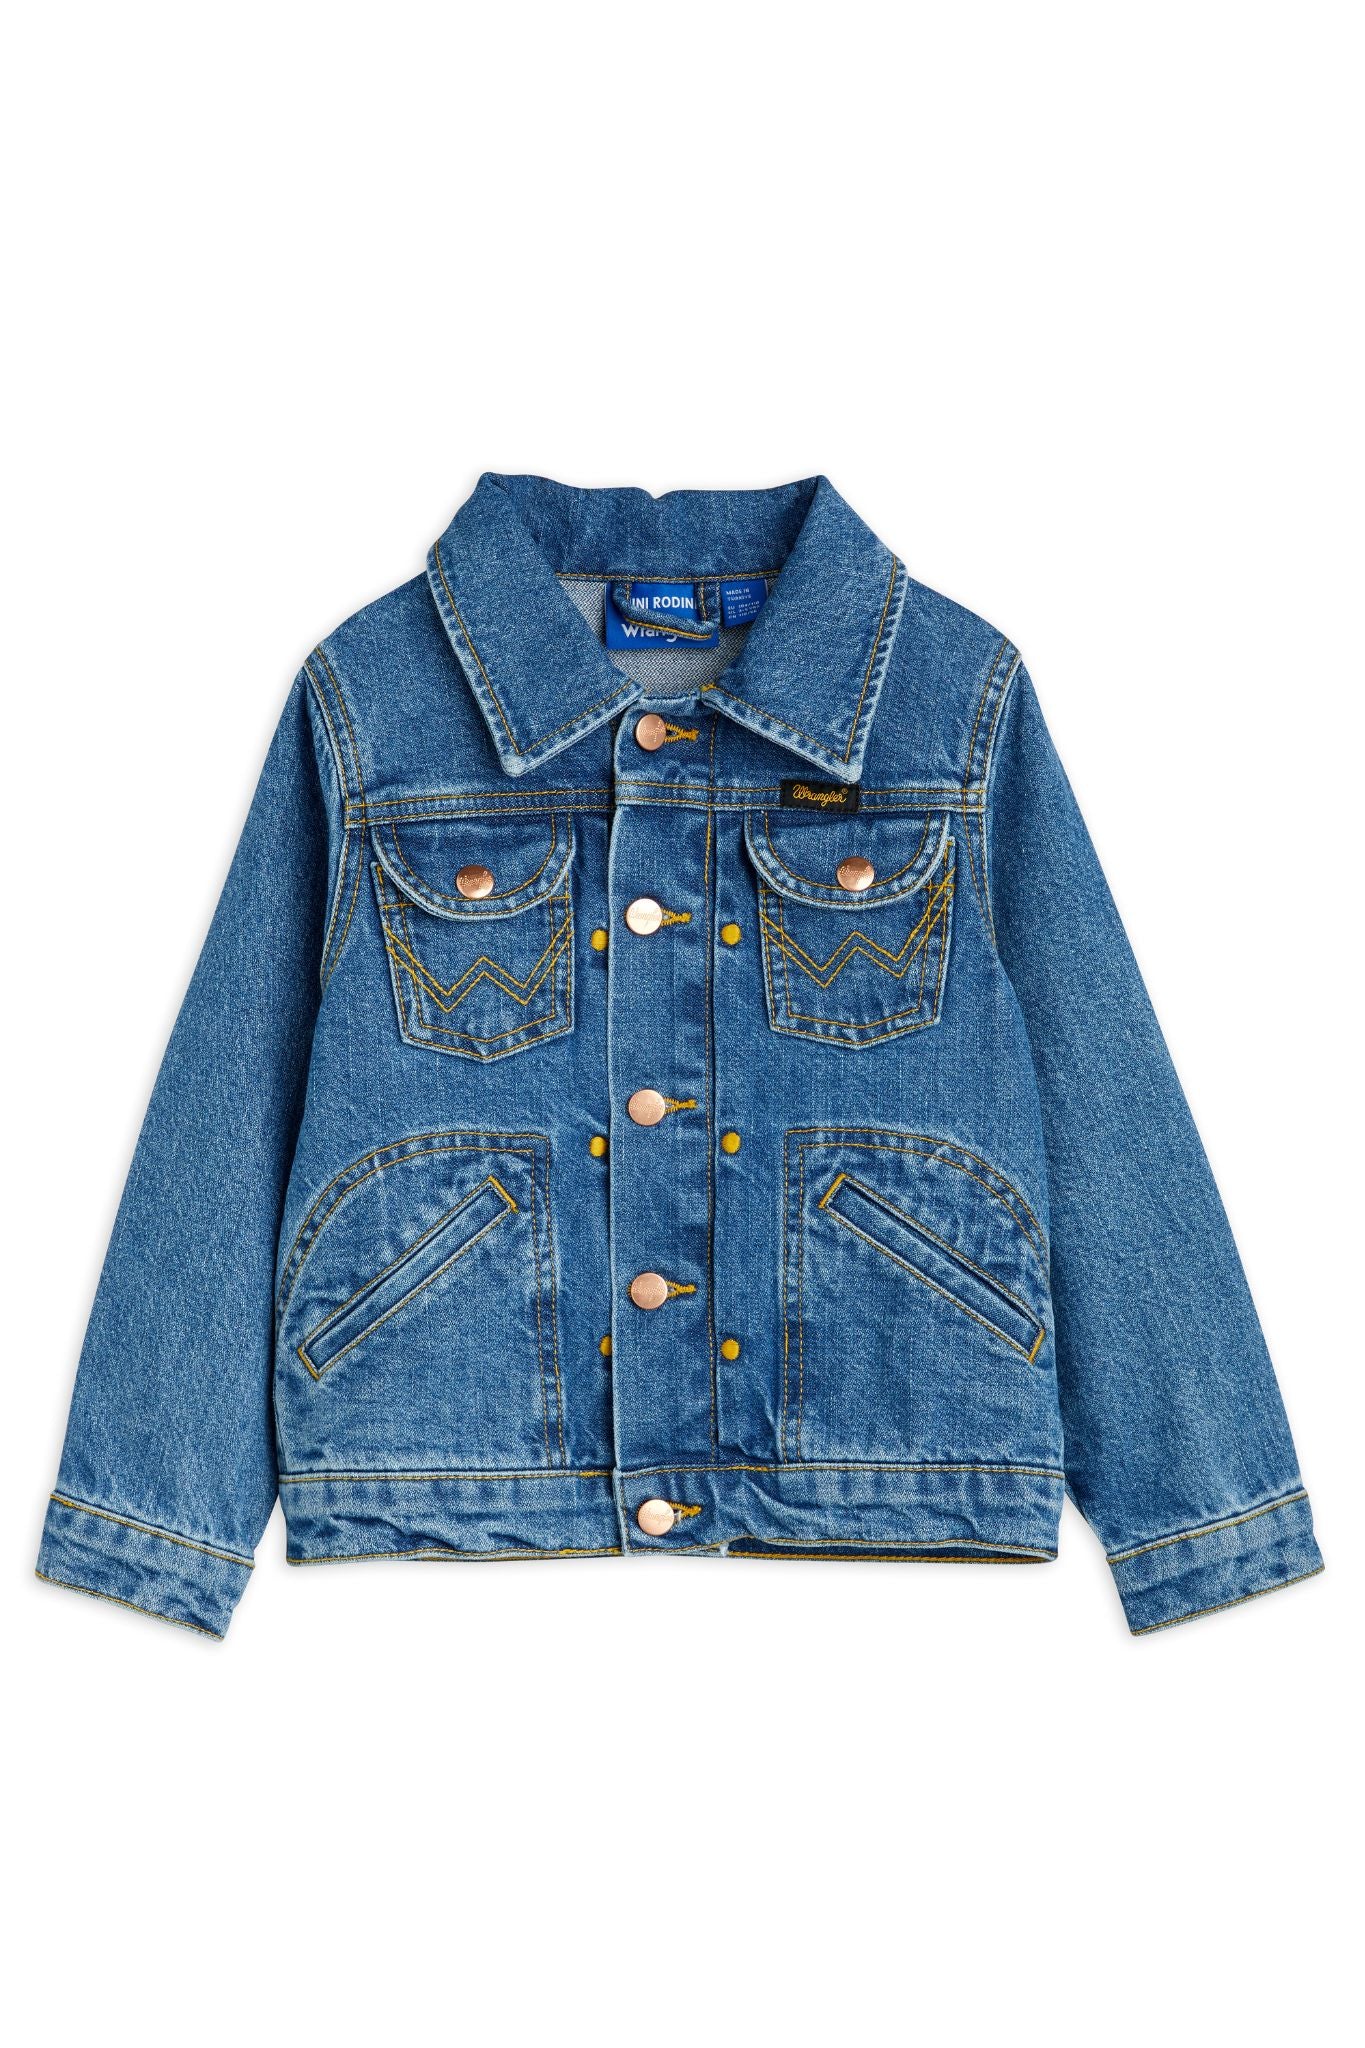 Thomas & Friends Boys Toddlers Denim Jacket Size 18M Embroidered 100%  Cotton | eBay